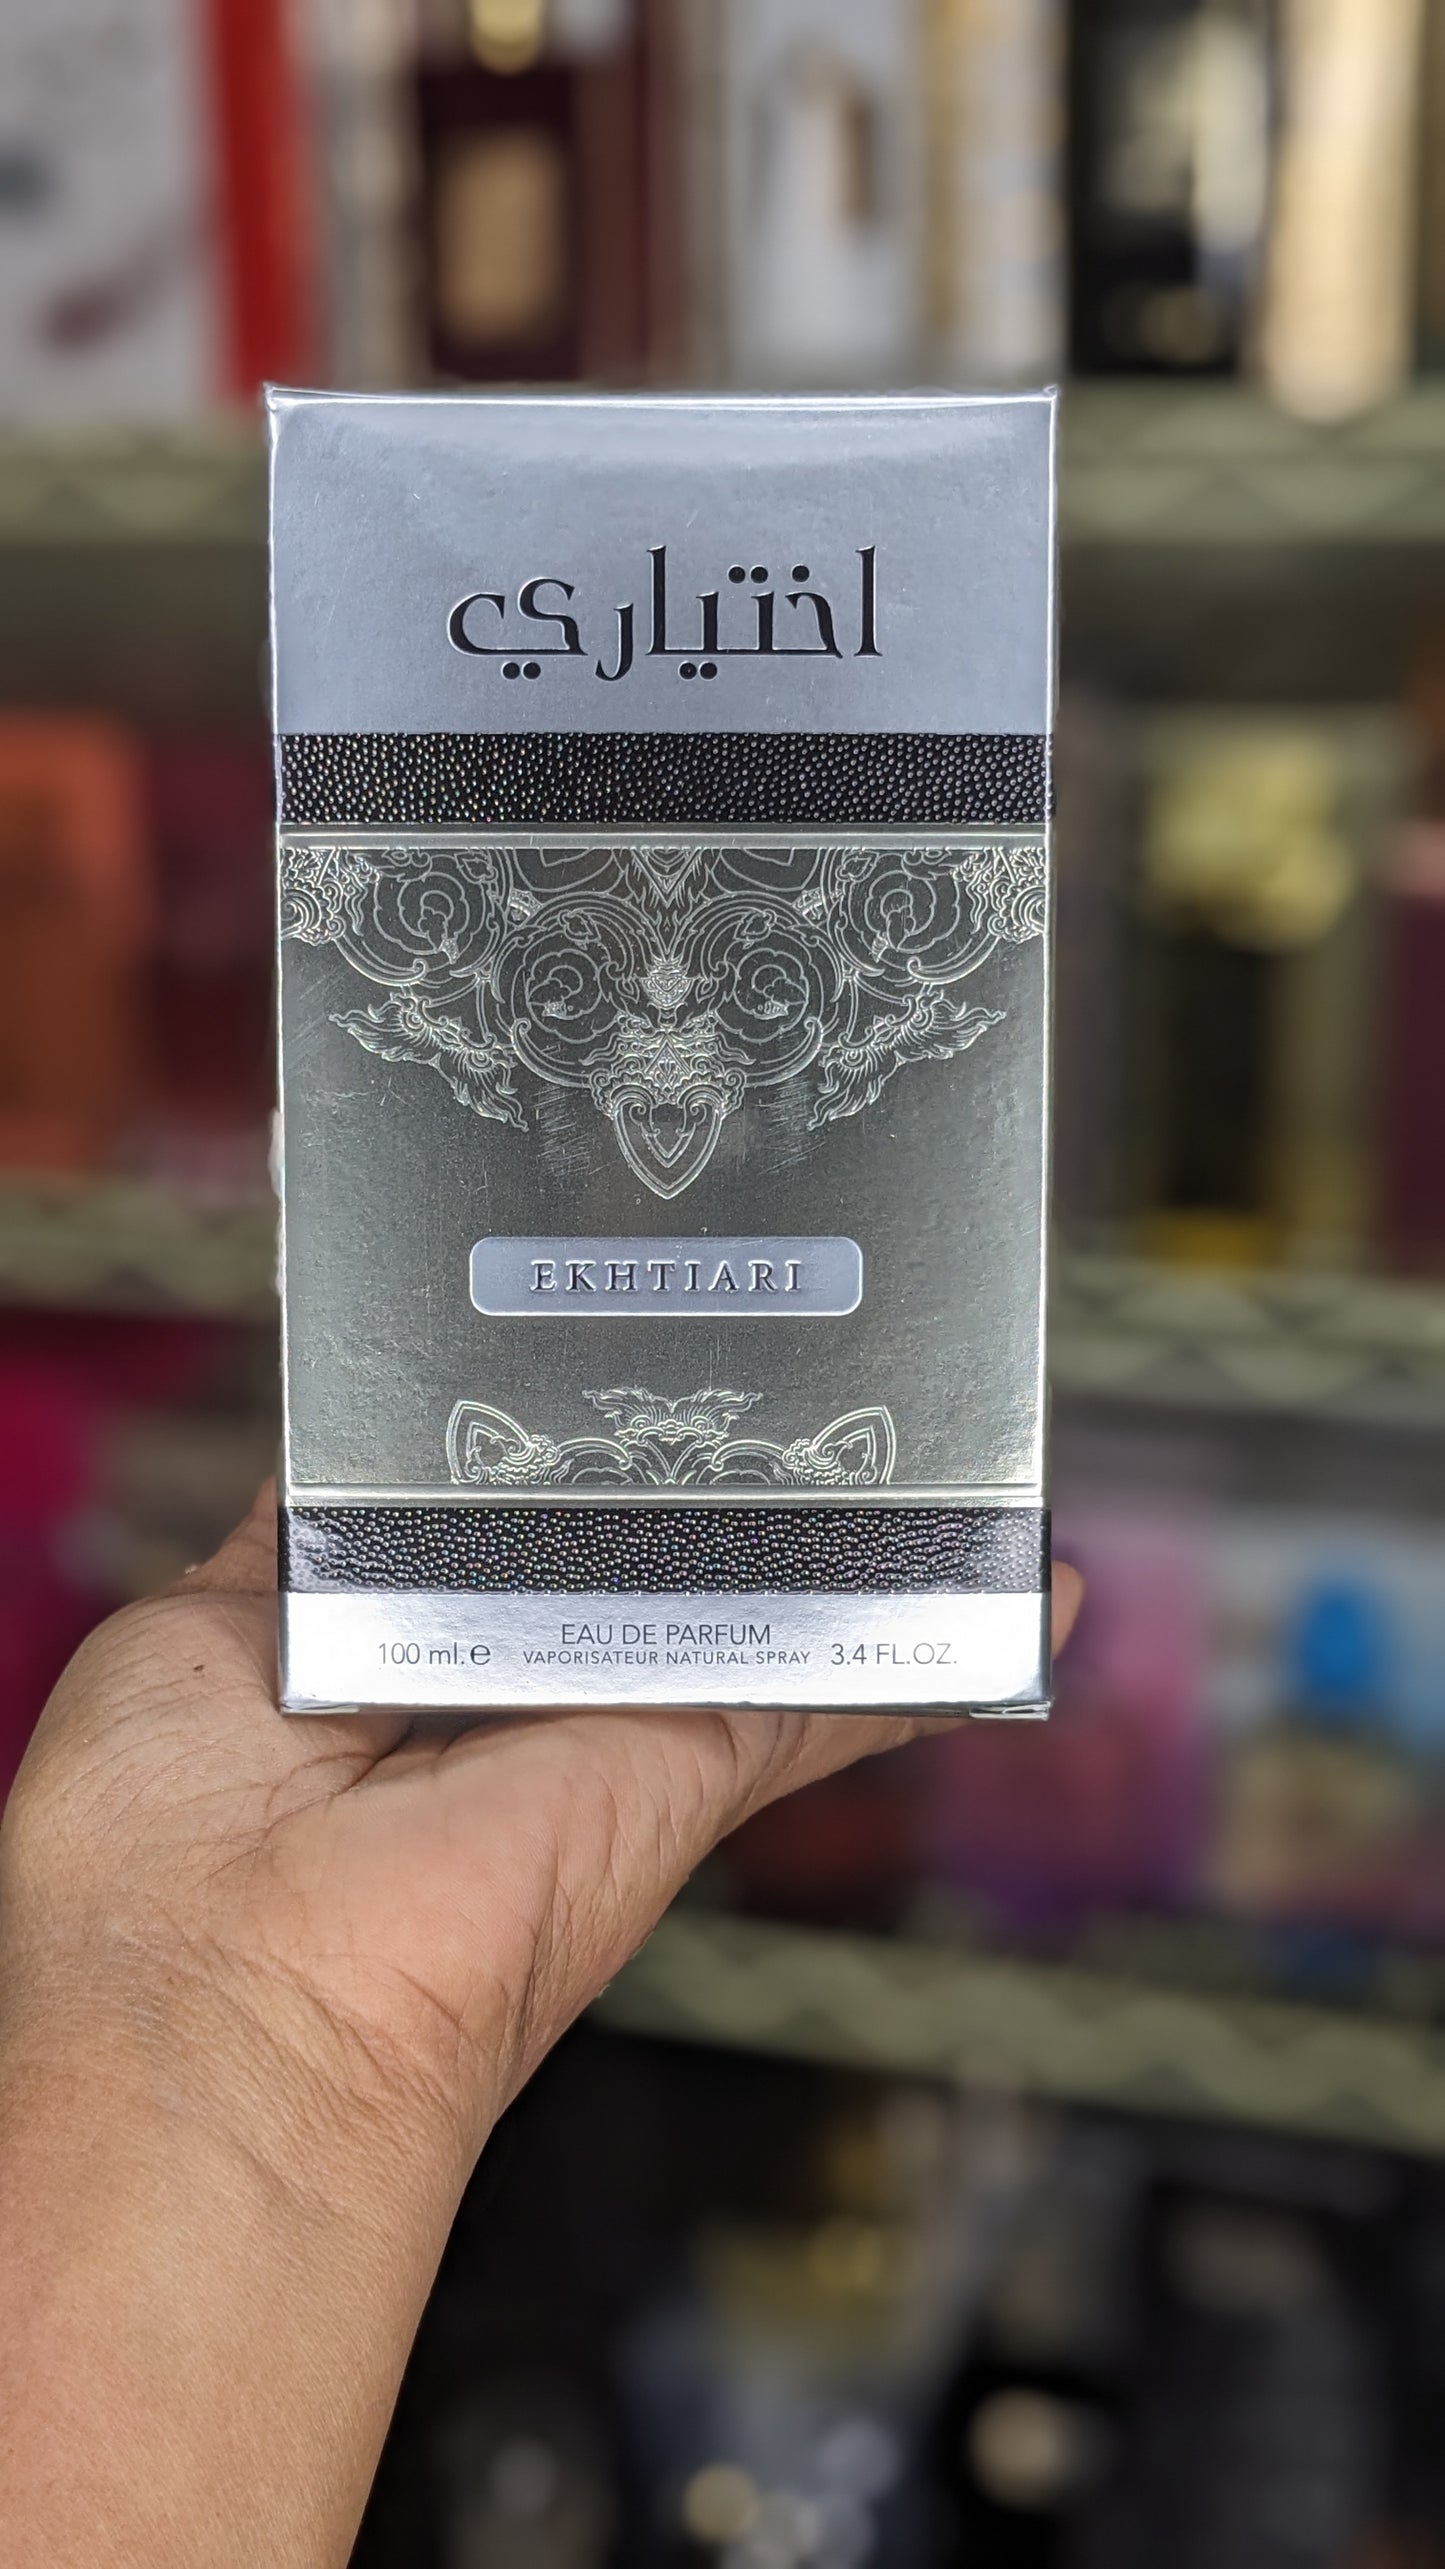 Ekhtiari by Lattafa Perfumes